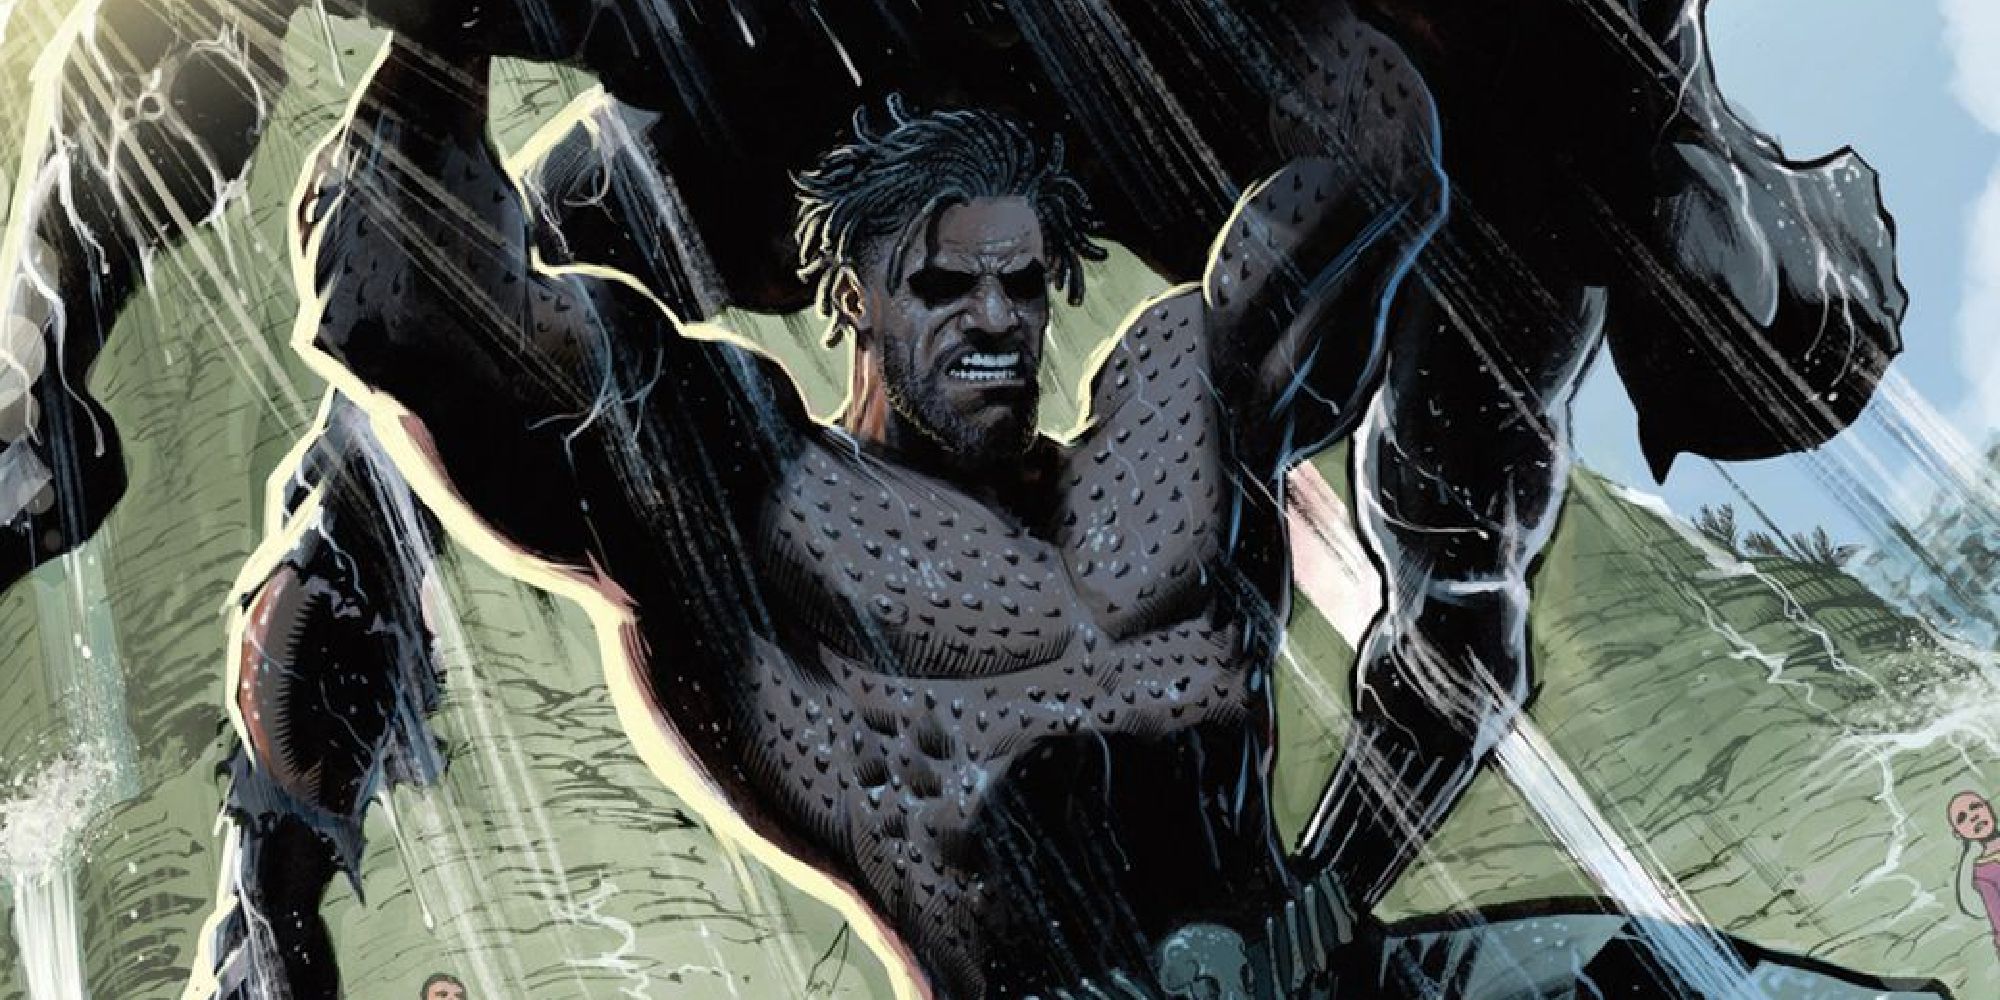 A shirtless Erik Killmonger holding up the Black Panther in battle